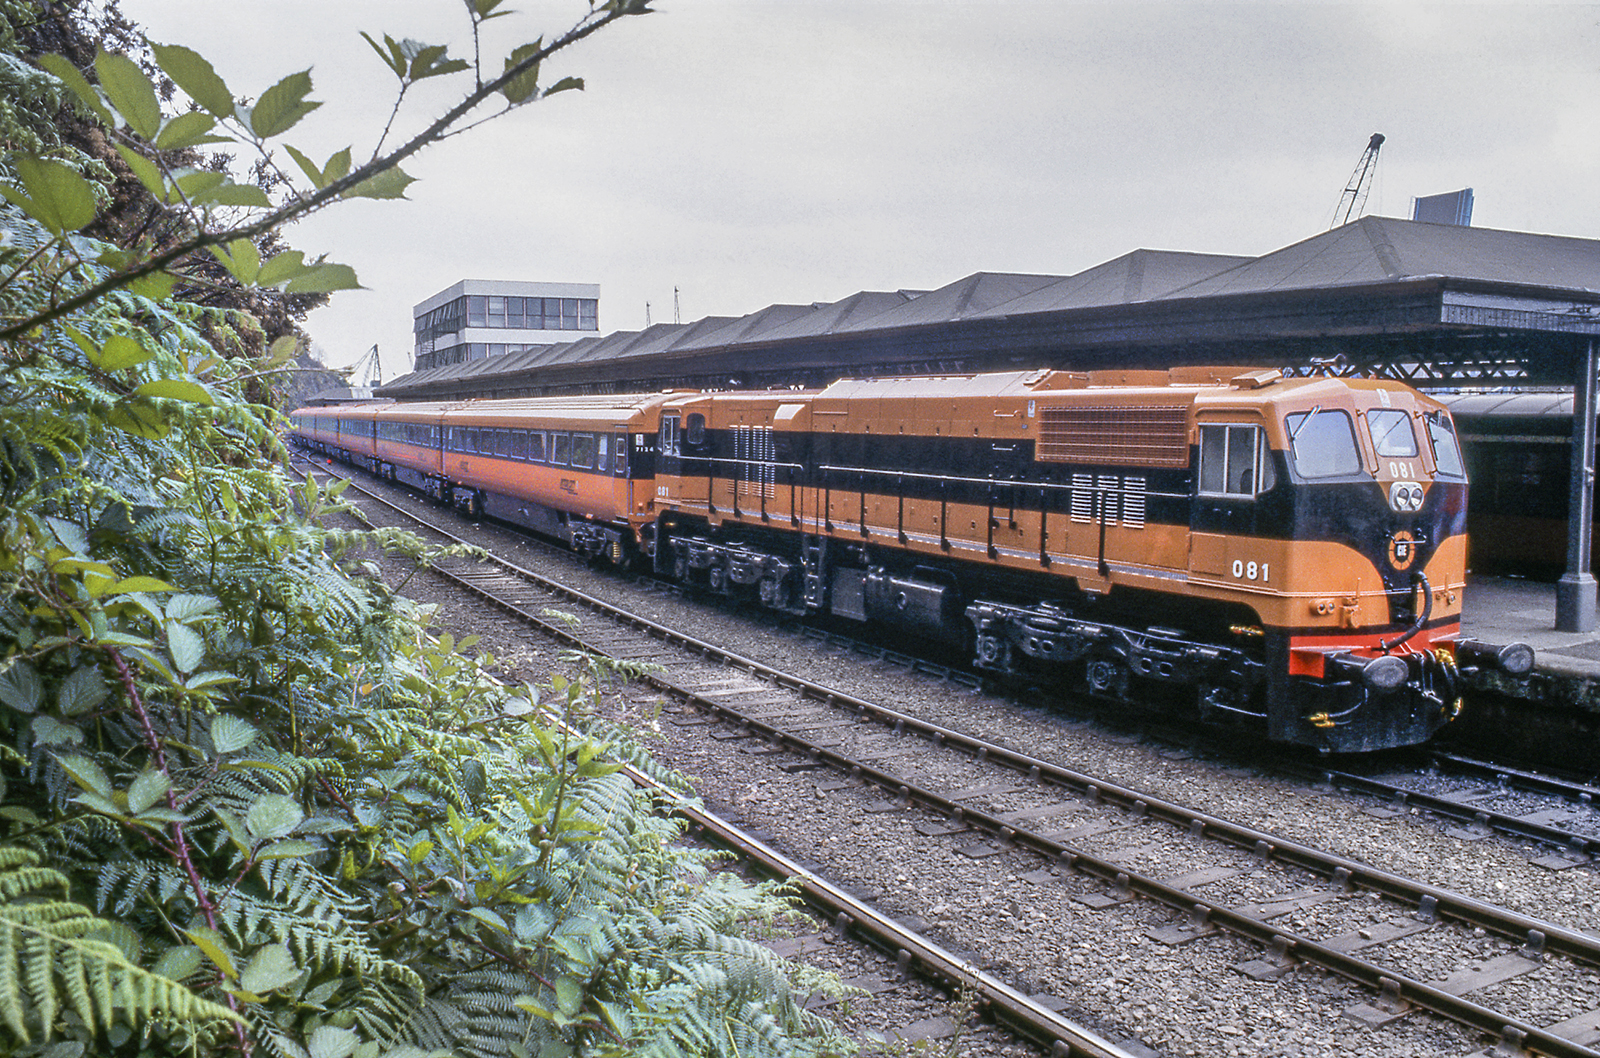 1984 New CIÉ Intercity Mk111 train